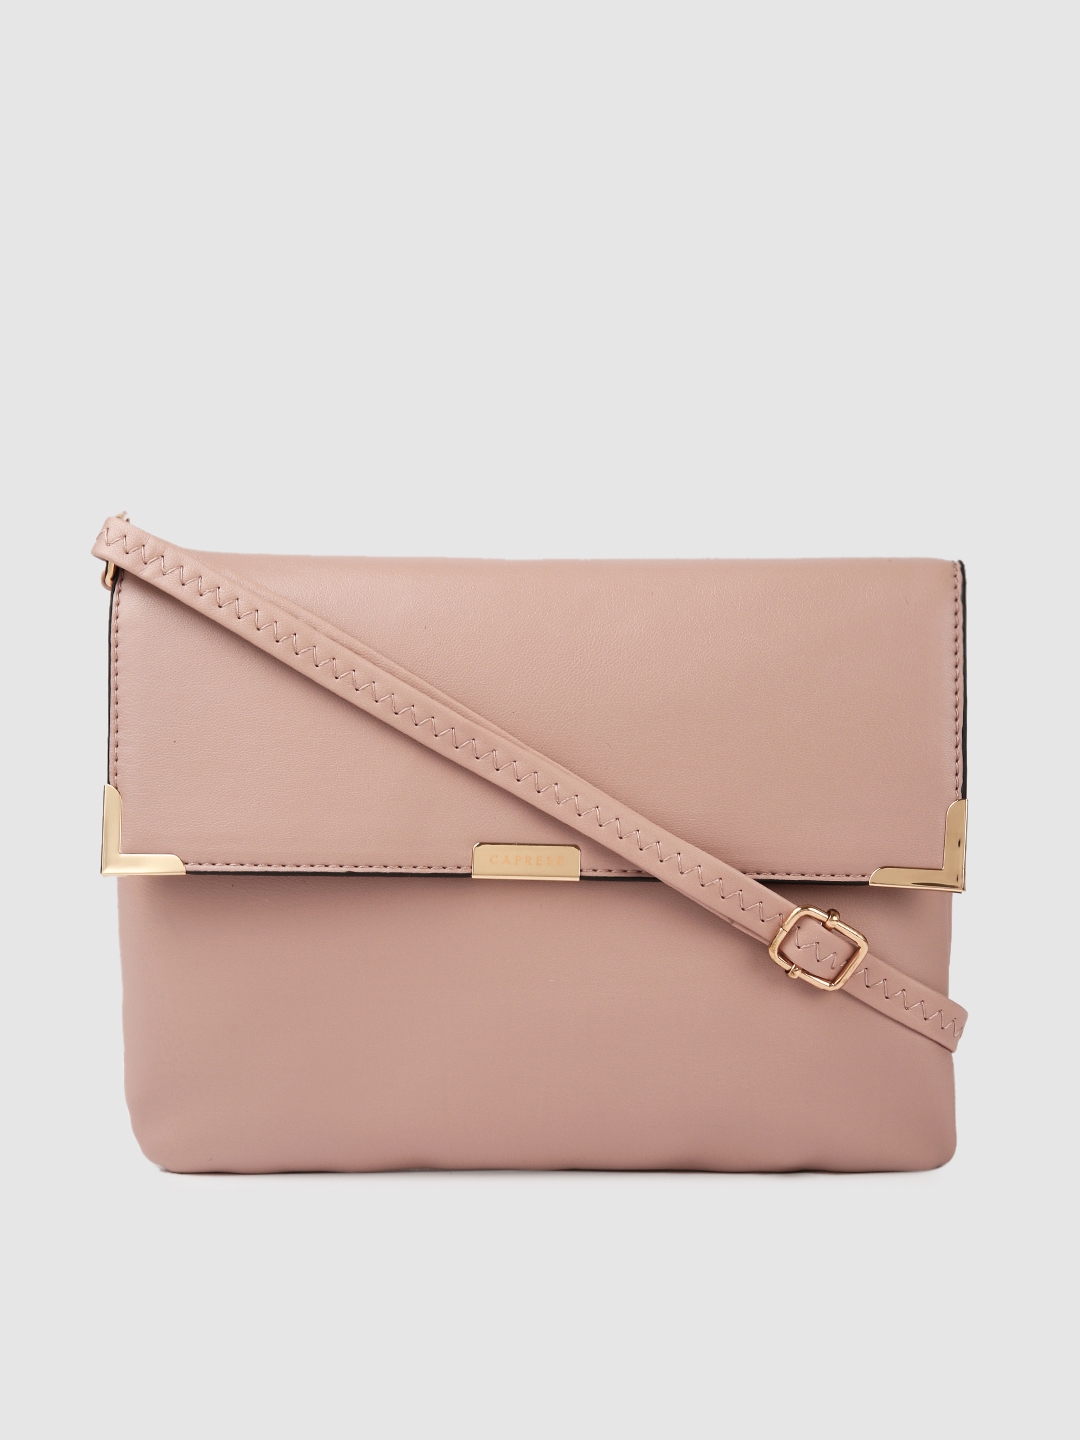 Buy Caprese Pink Solid Sling Bag - Handbags for Women 10486098 | Myntra